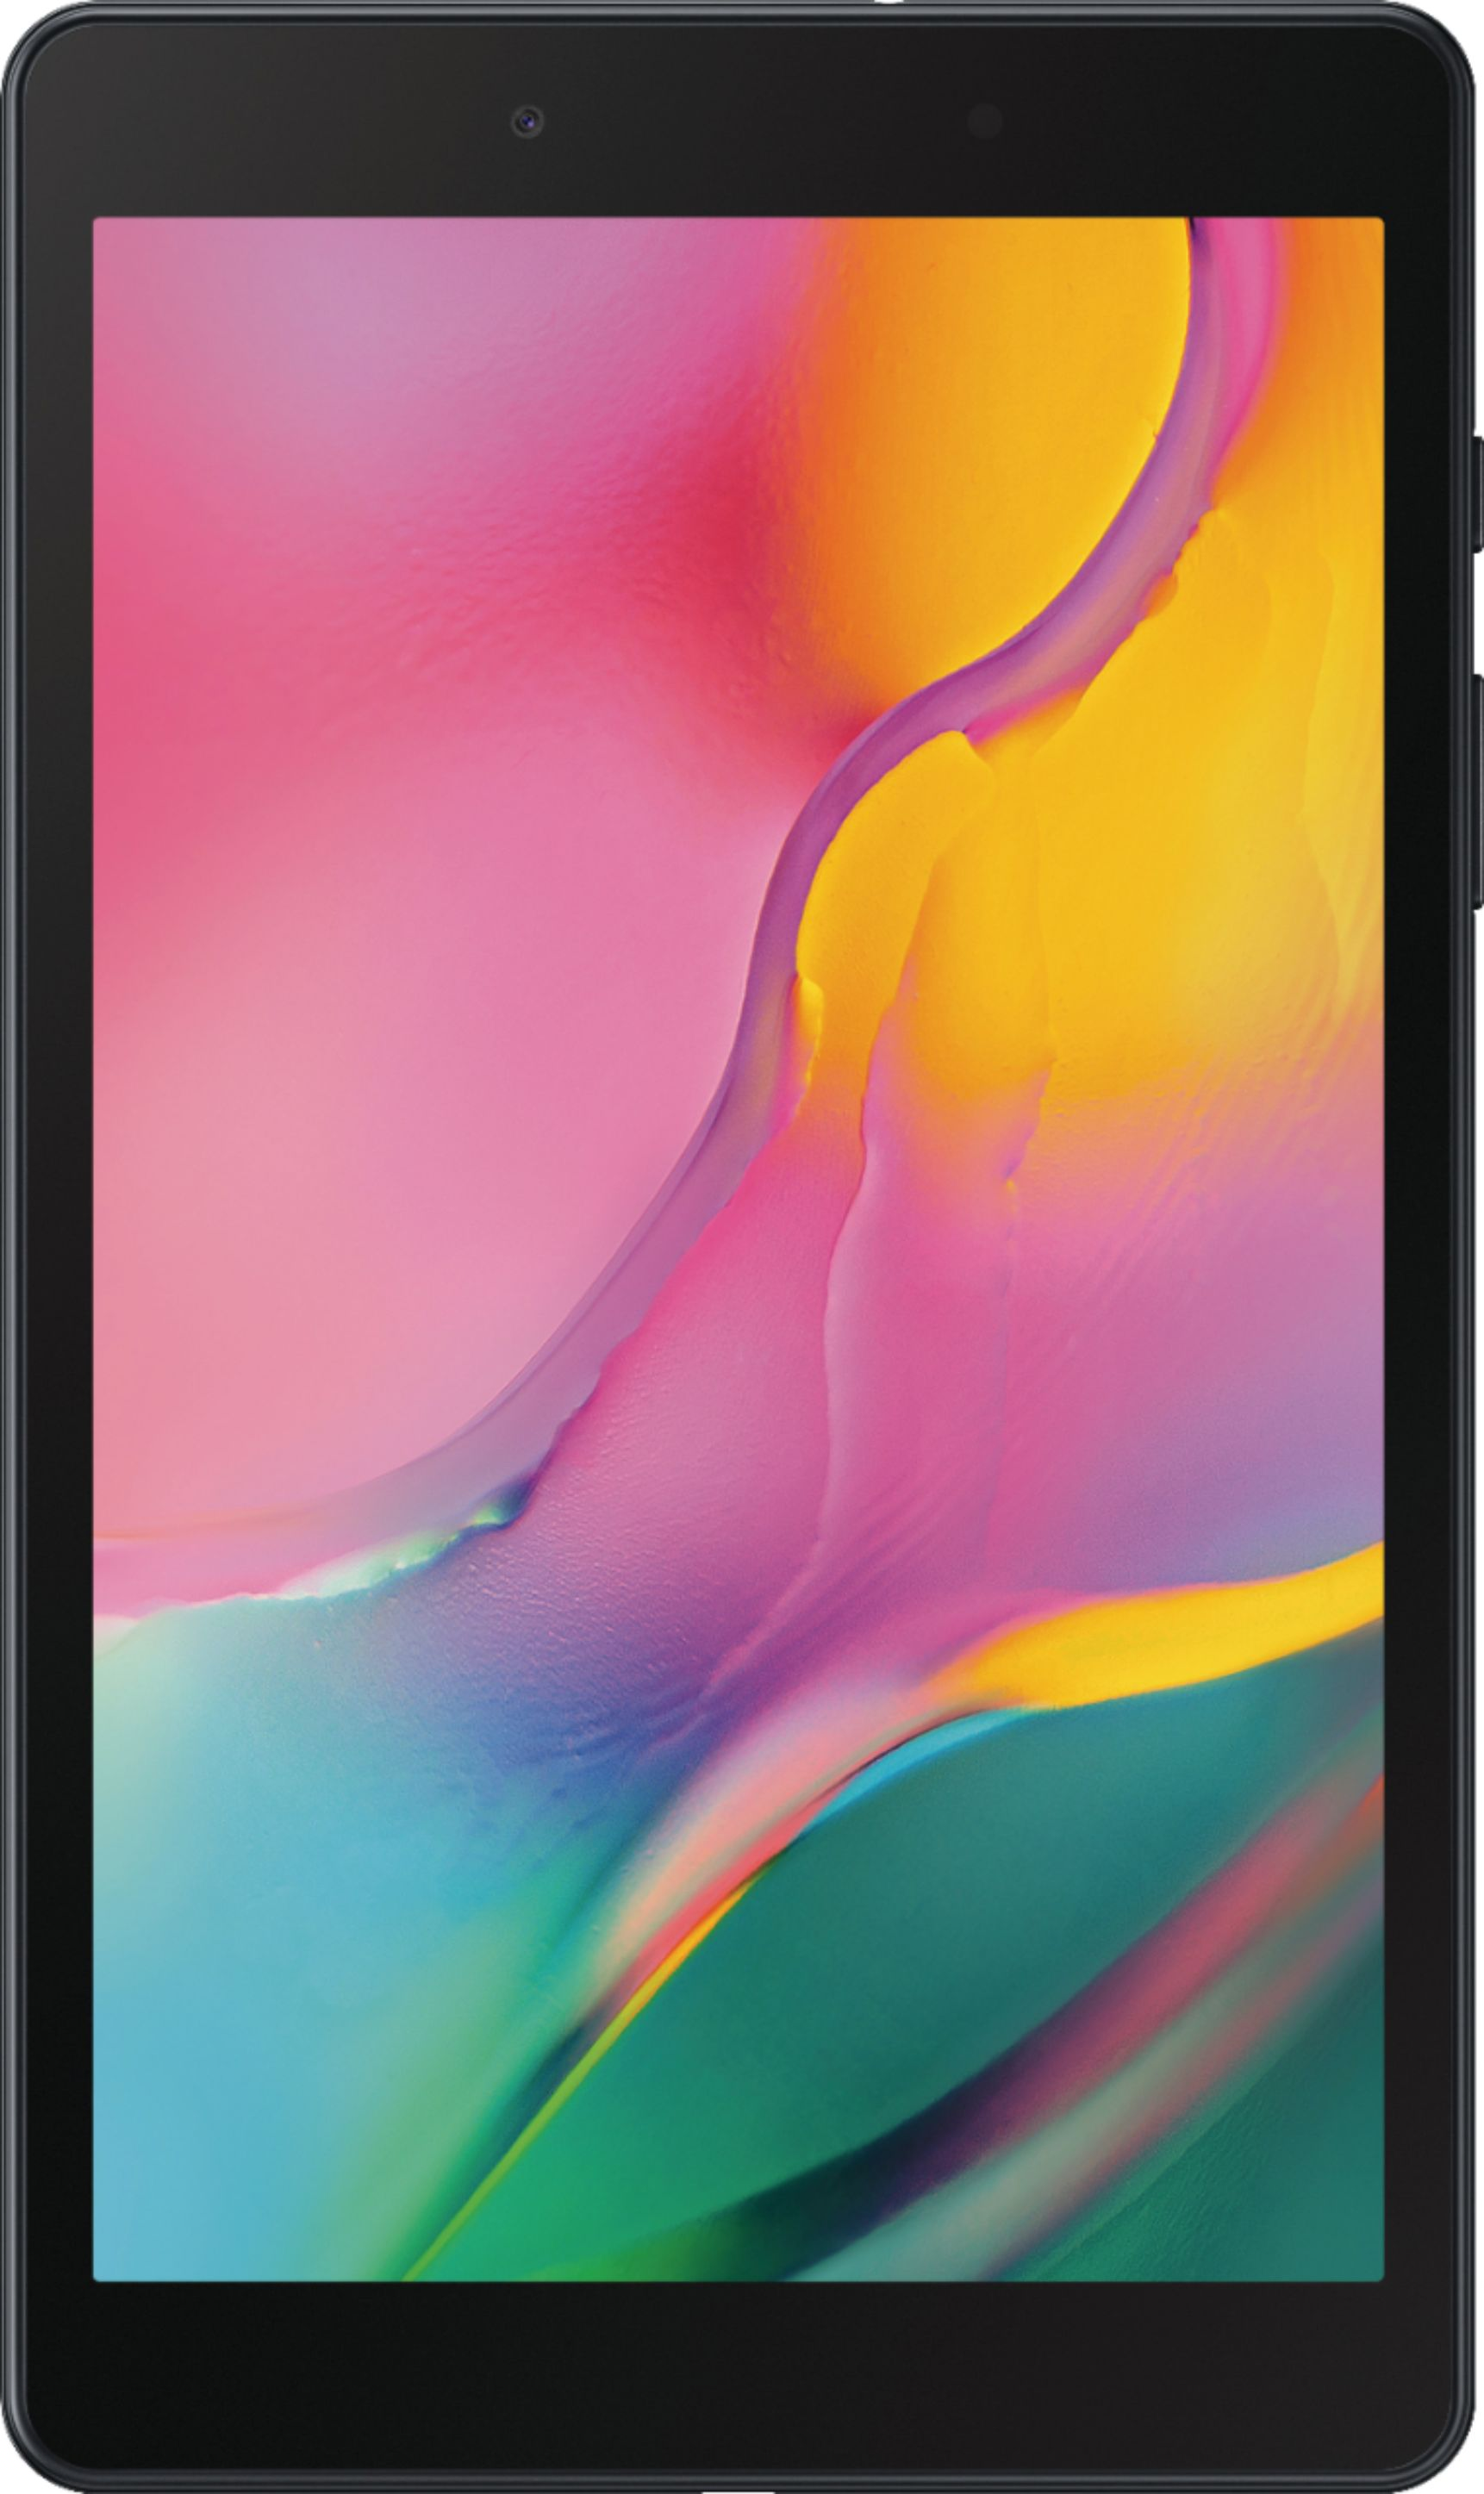 Samsung Galaxy Tab A (2019) 8" 32GB Black SM-T290NZKAXAR - Best Buy $127.99